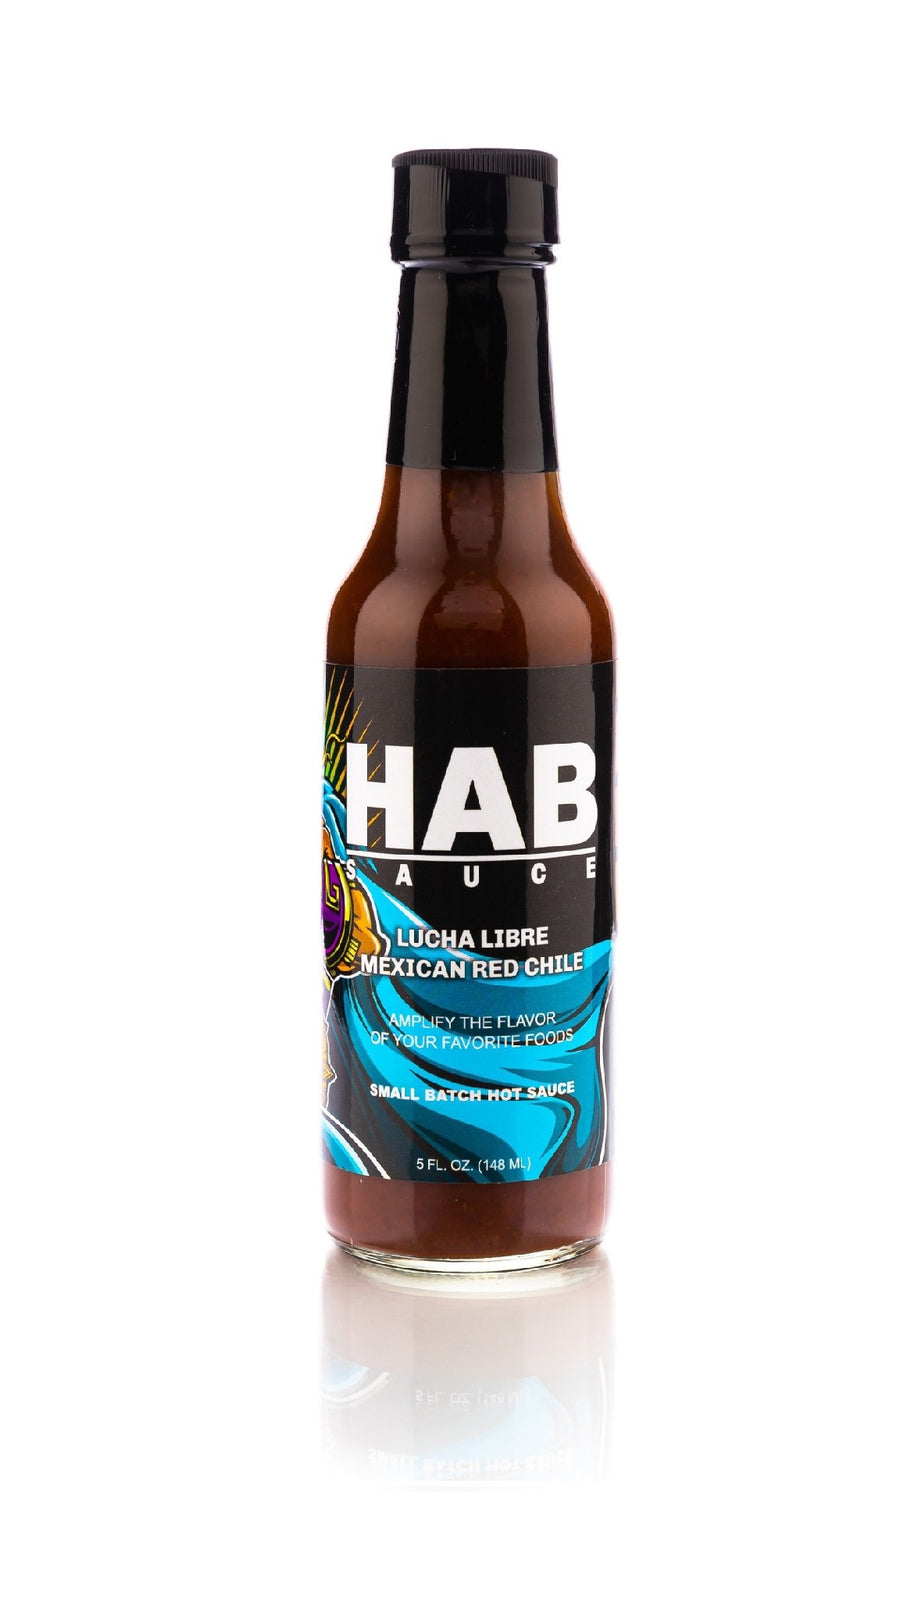 HAB Sauce